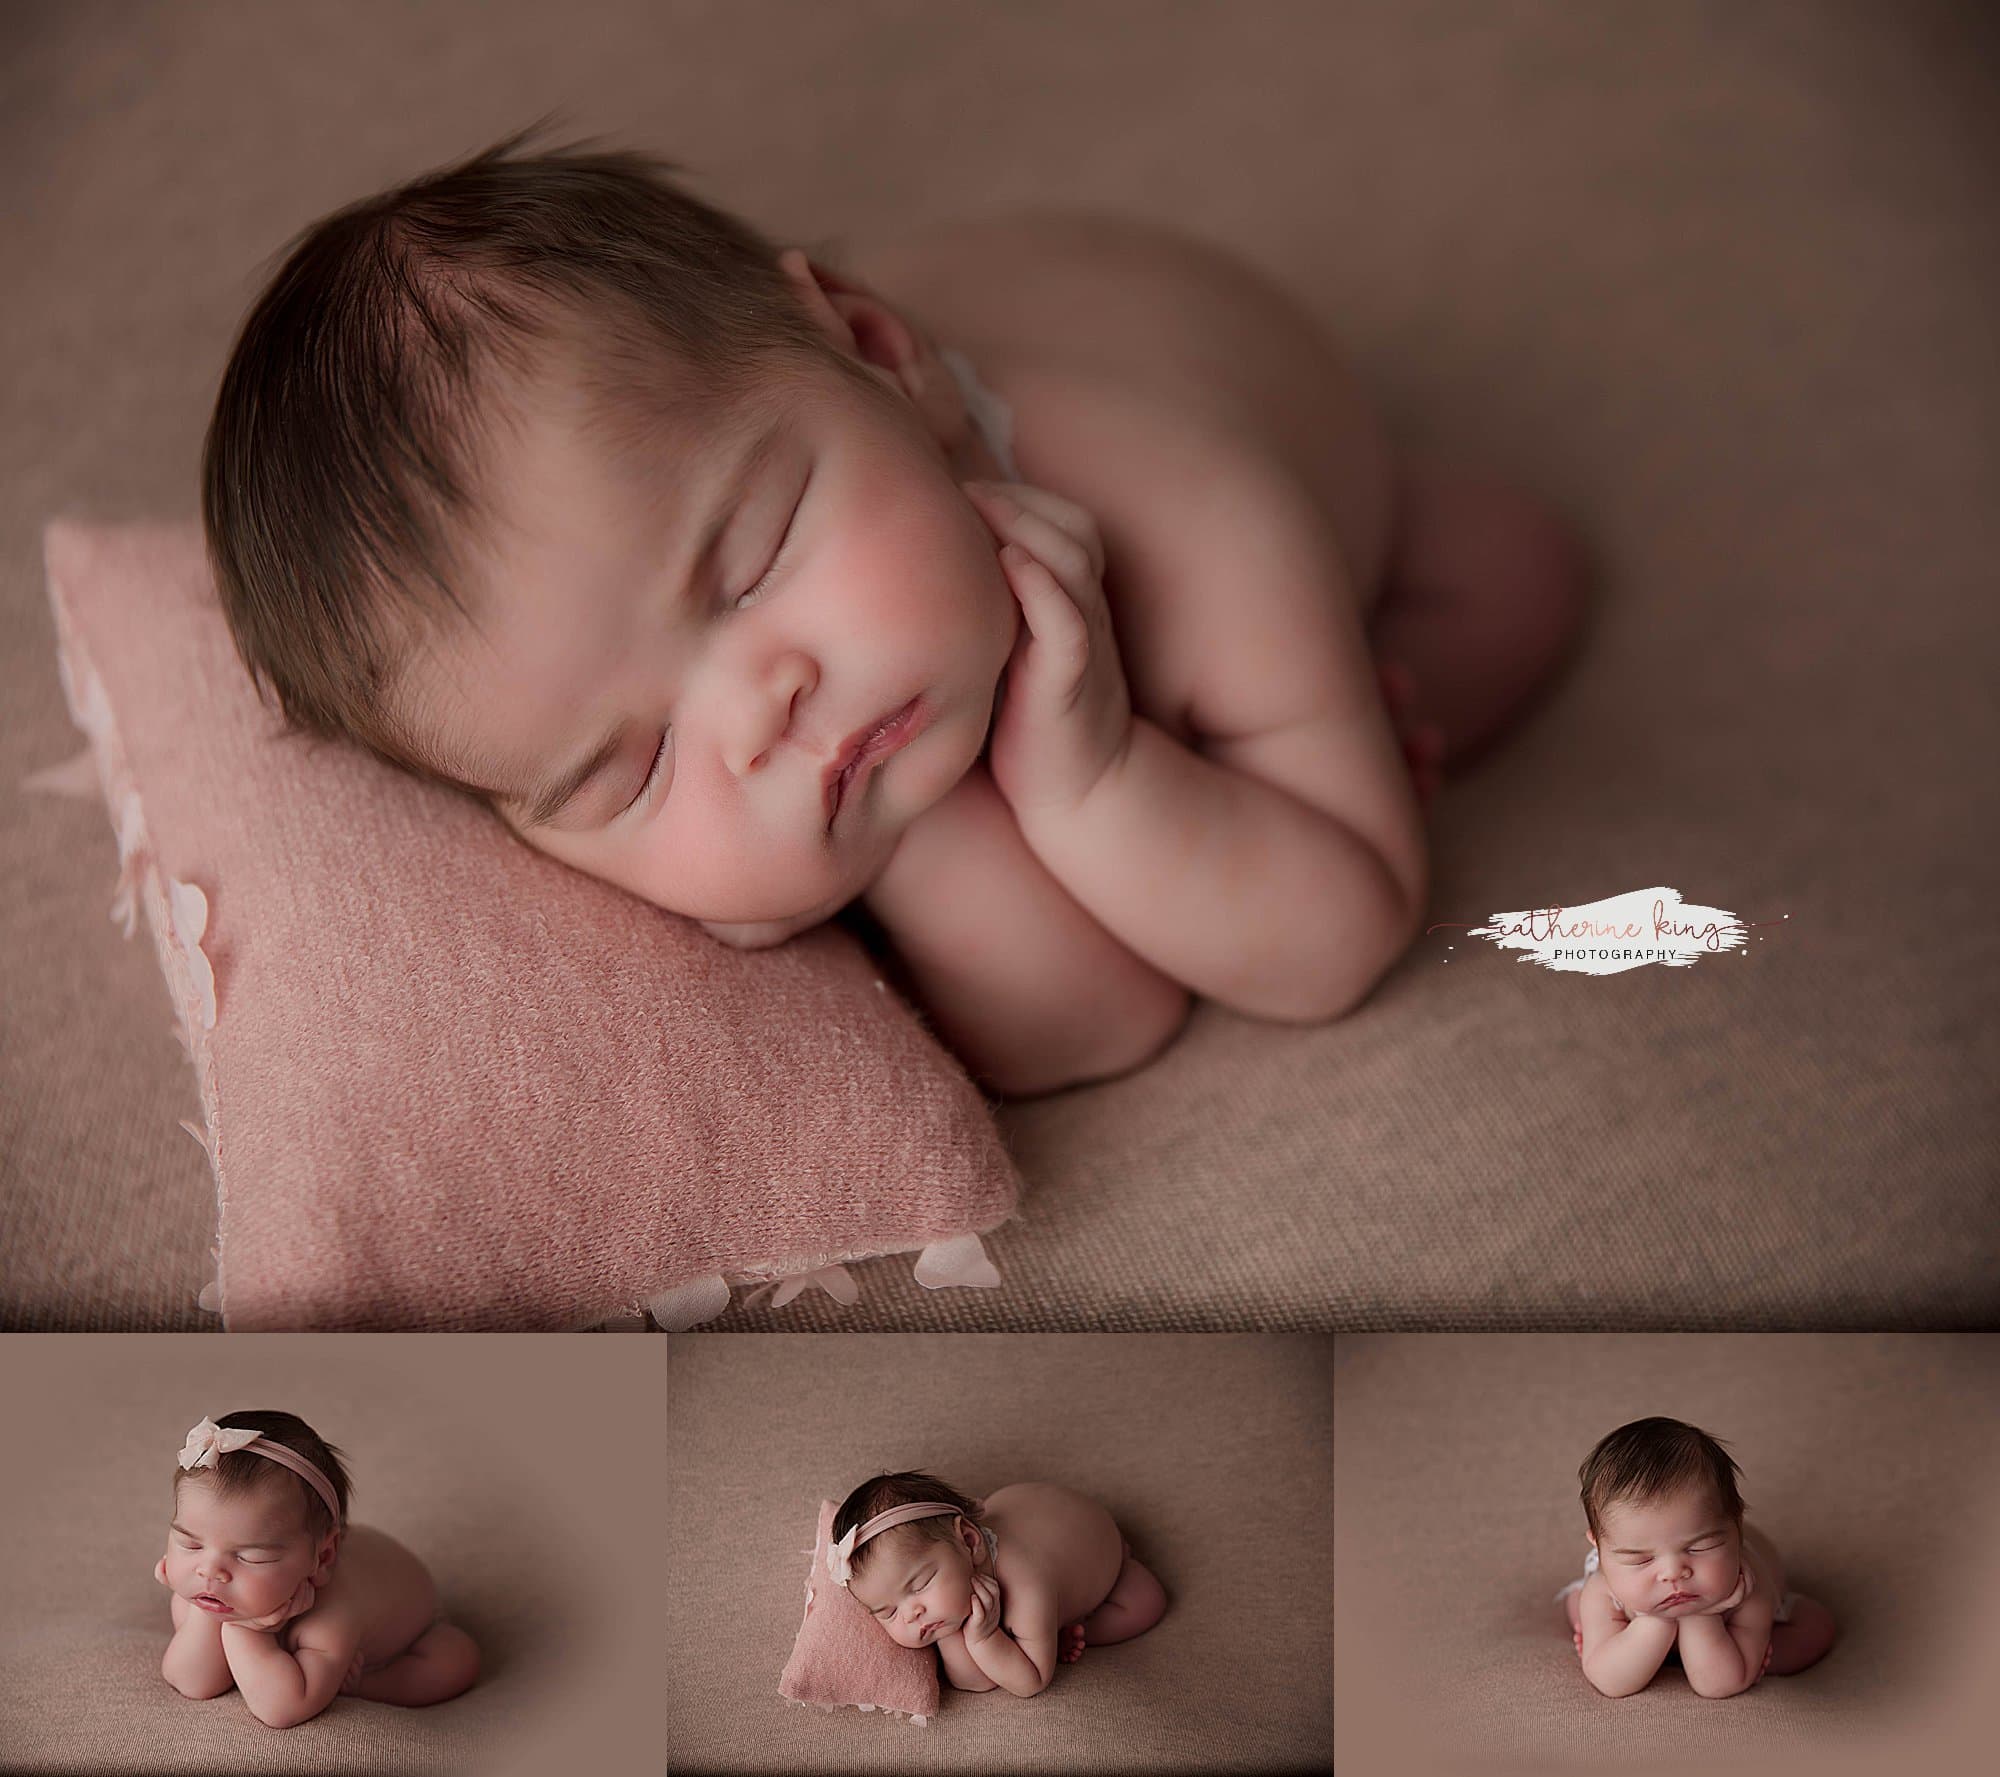 Madison CT Newborn Photographer - recent photo sessions